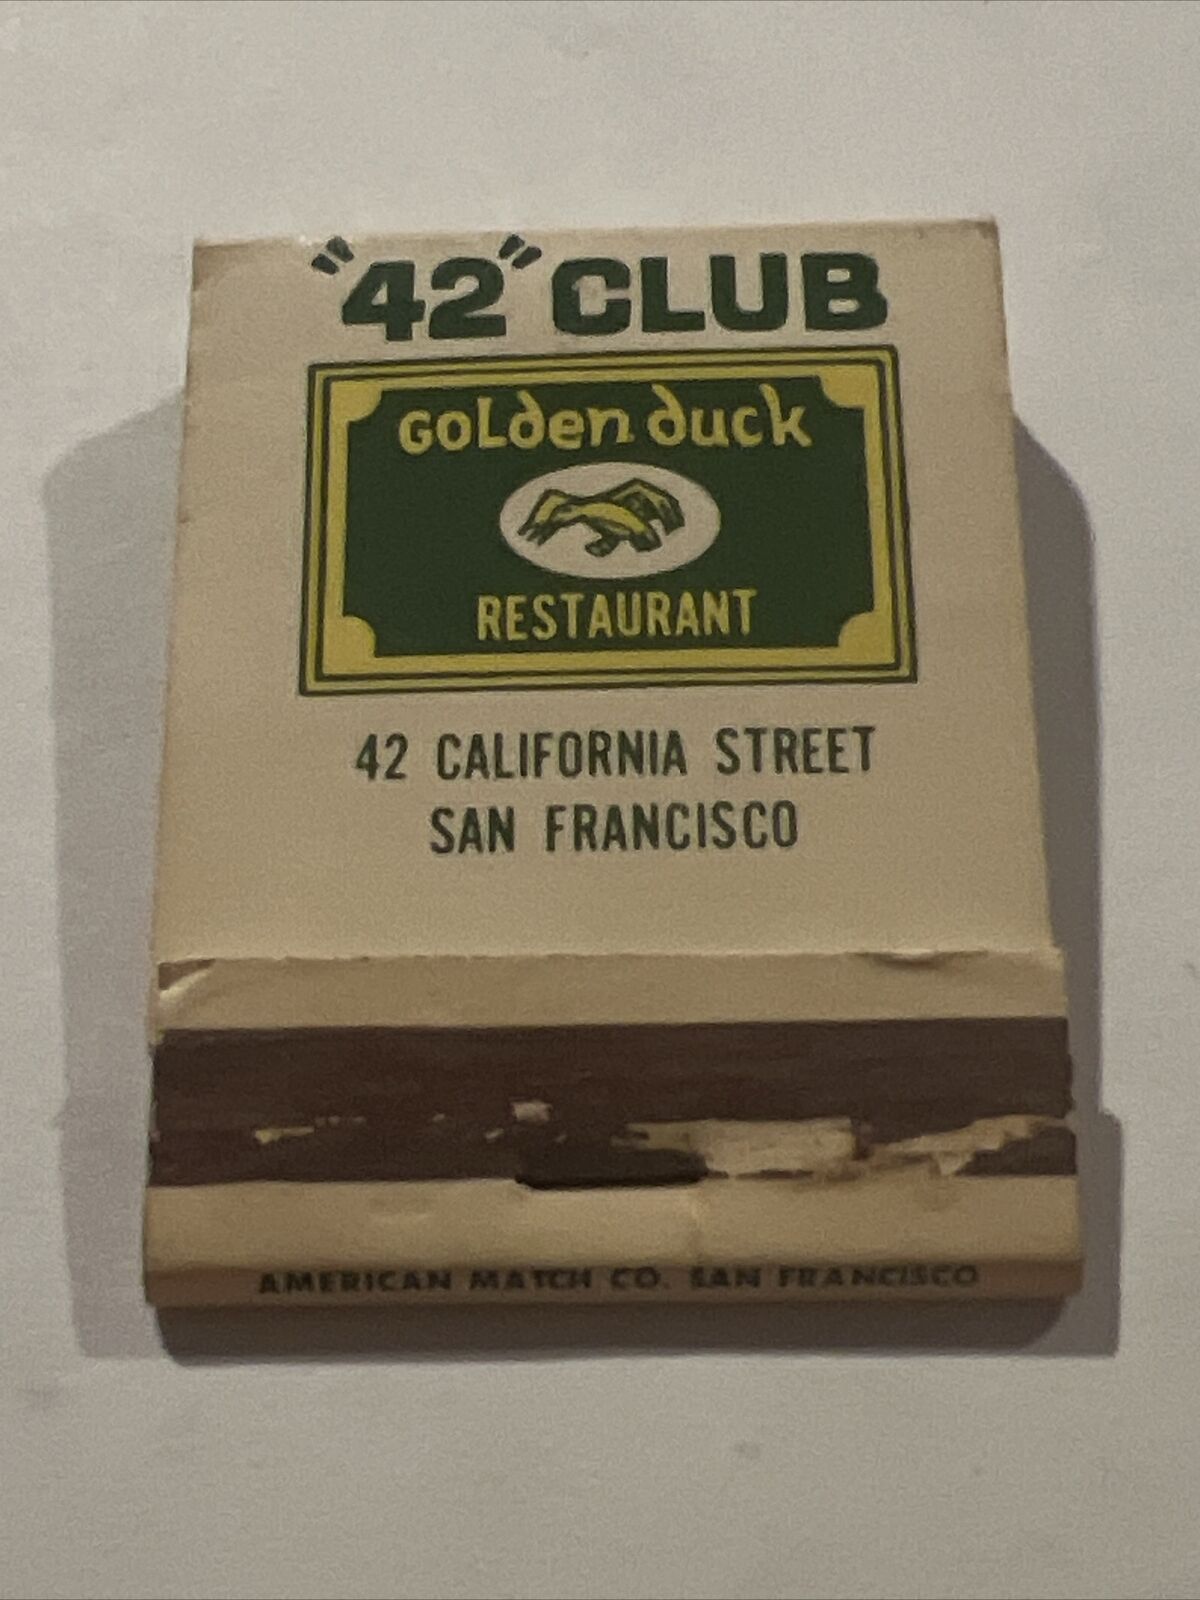 c1950 Golden Duck Restaurant 42 Club San Francisco California CA Matchbook